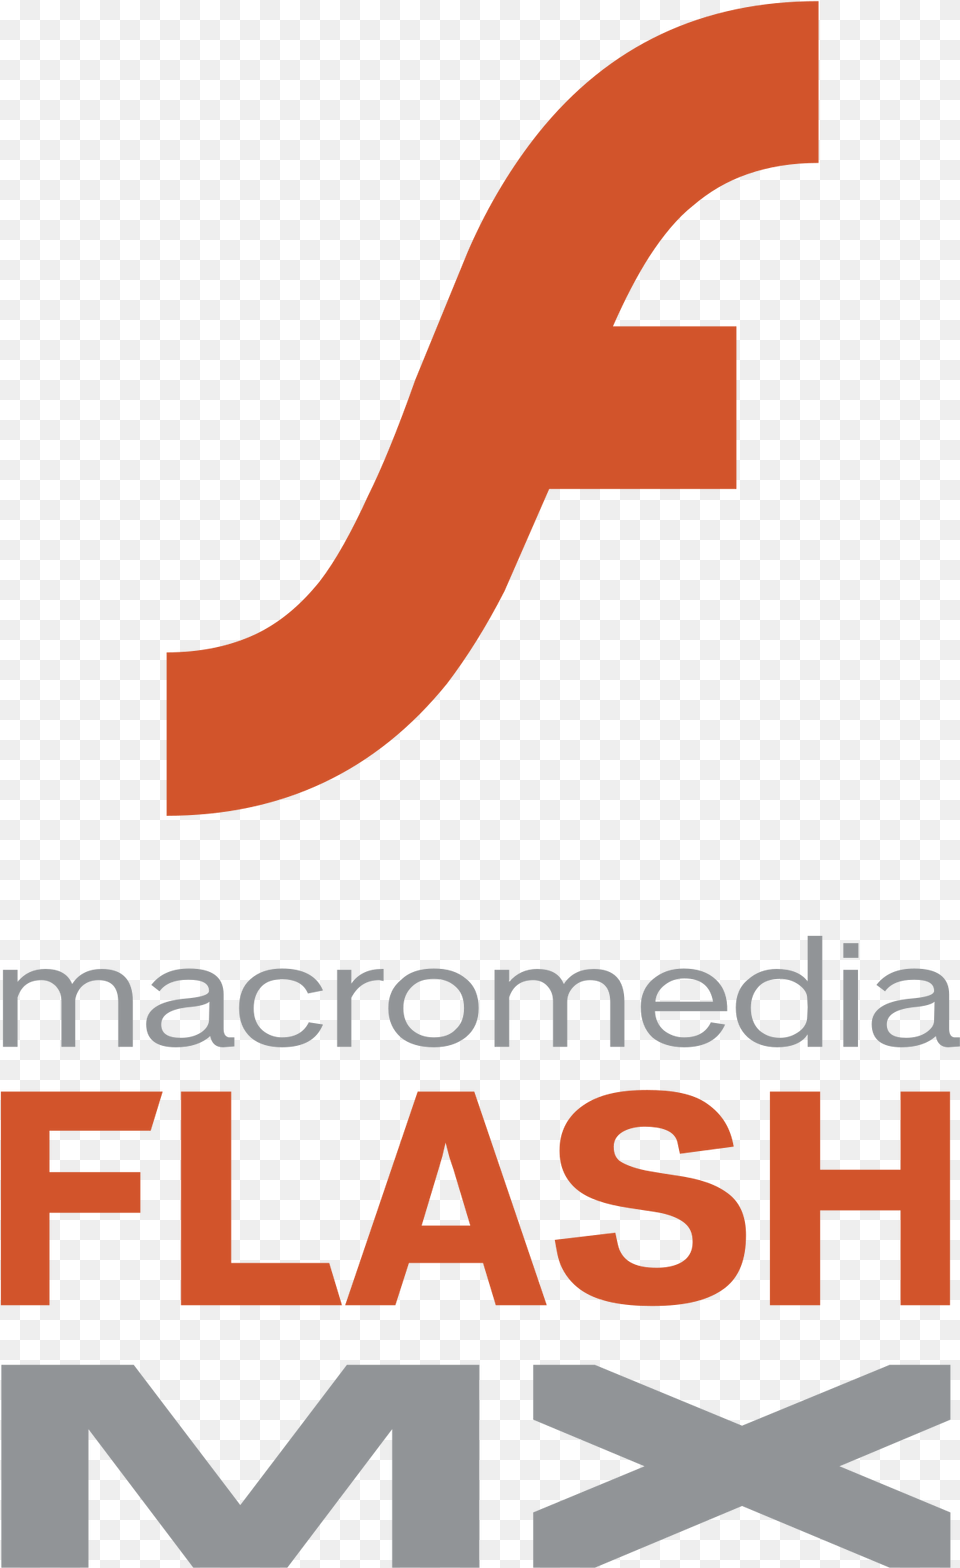 Macromedia Flash Mx Logo, Advertisement, Poster, Book, Publication Png Image